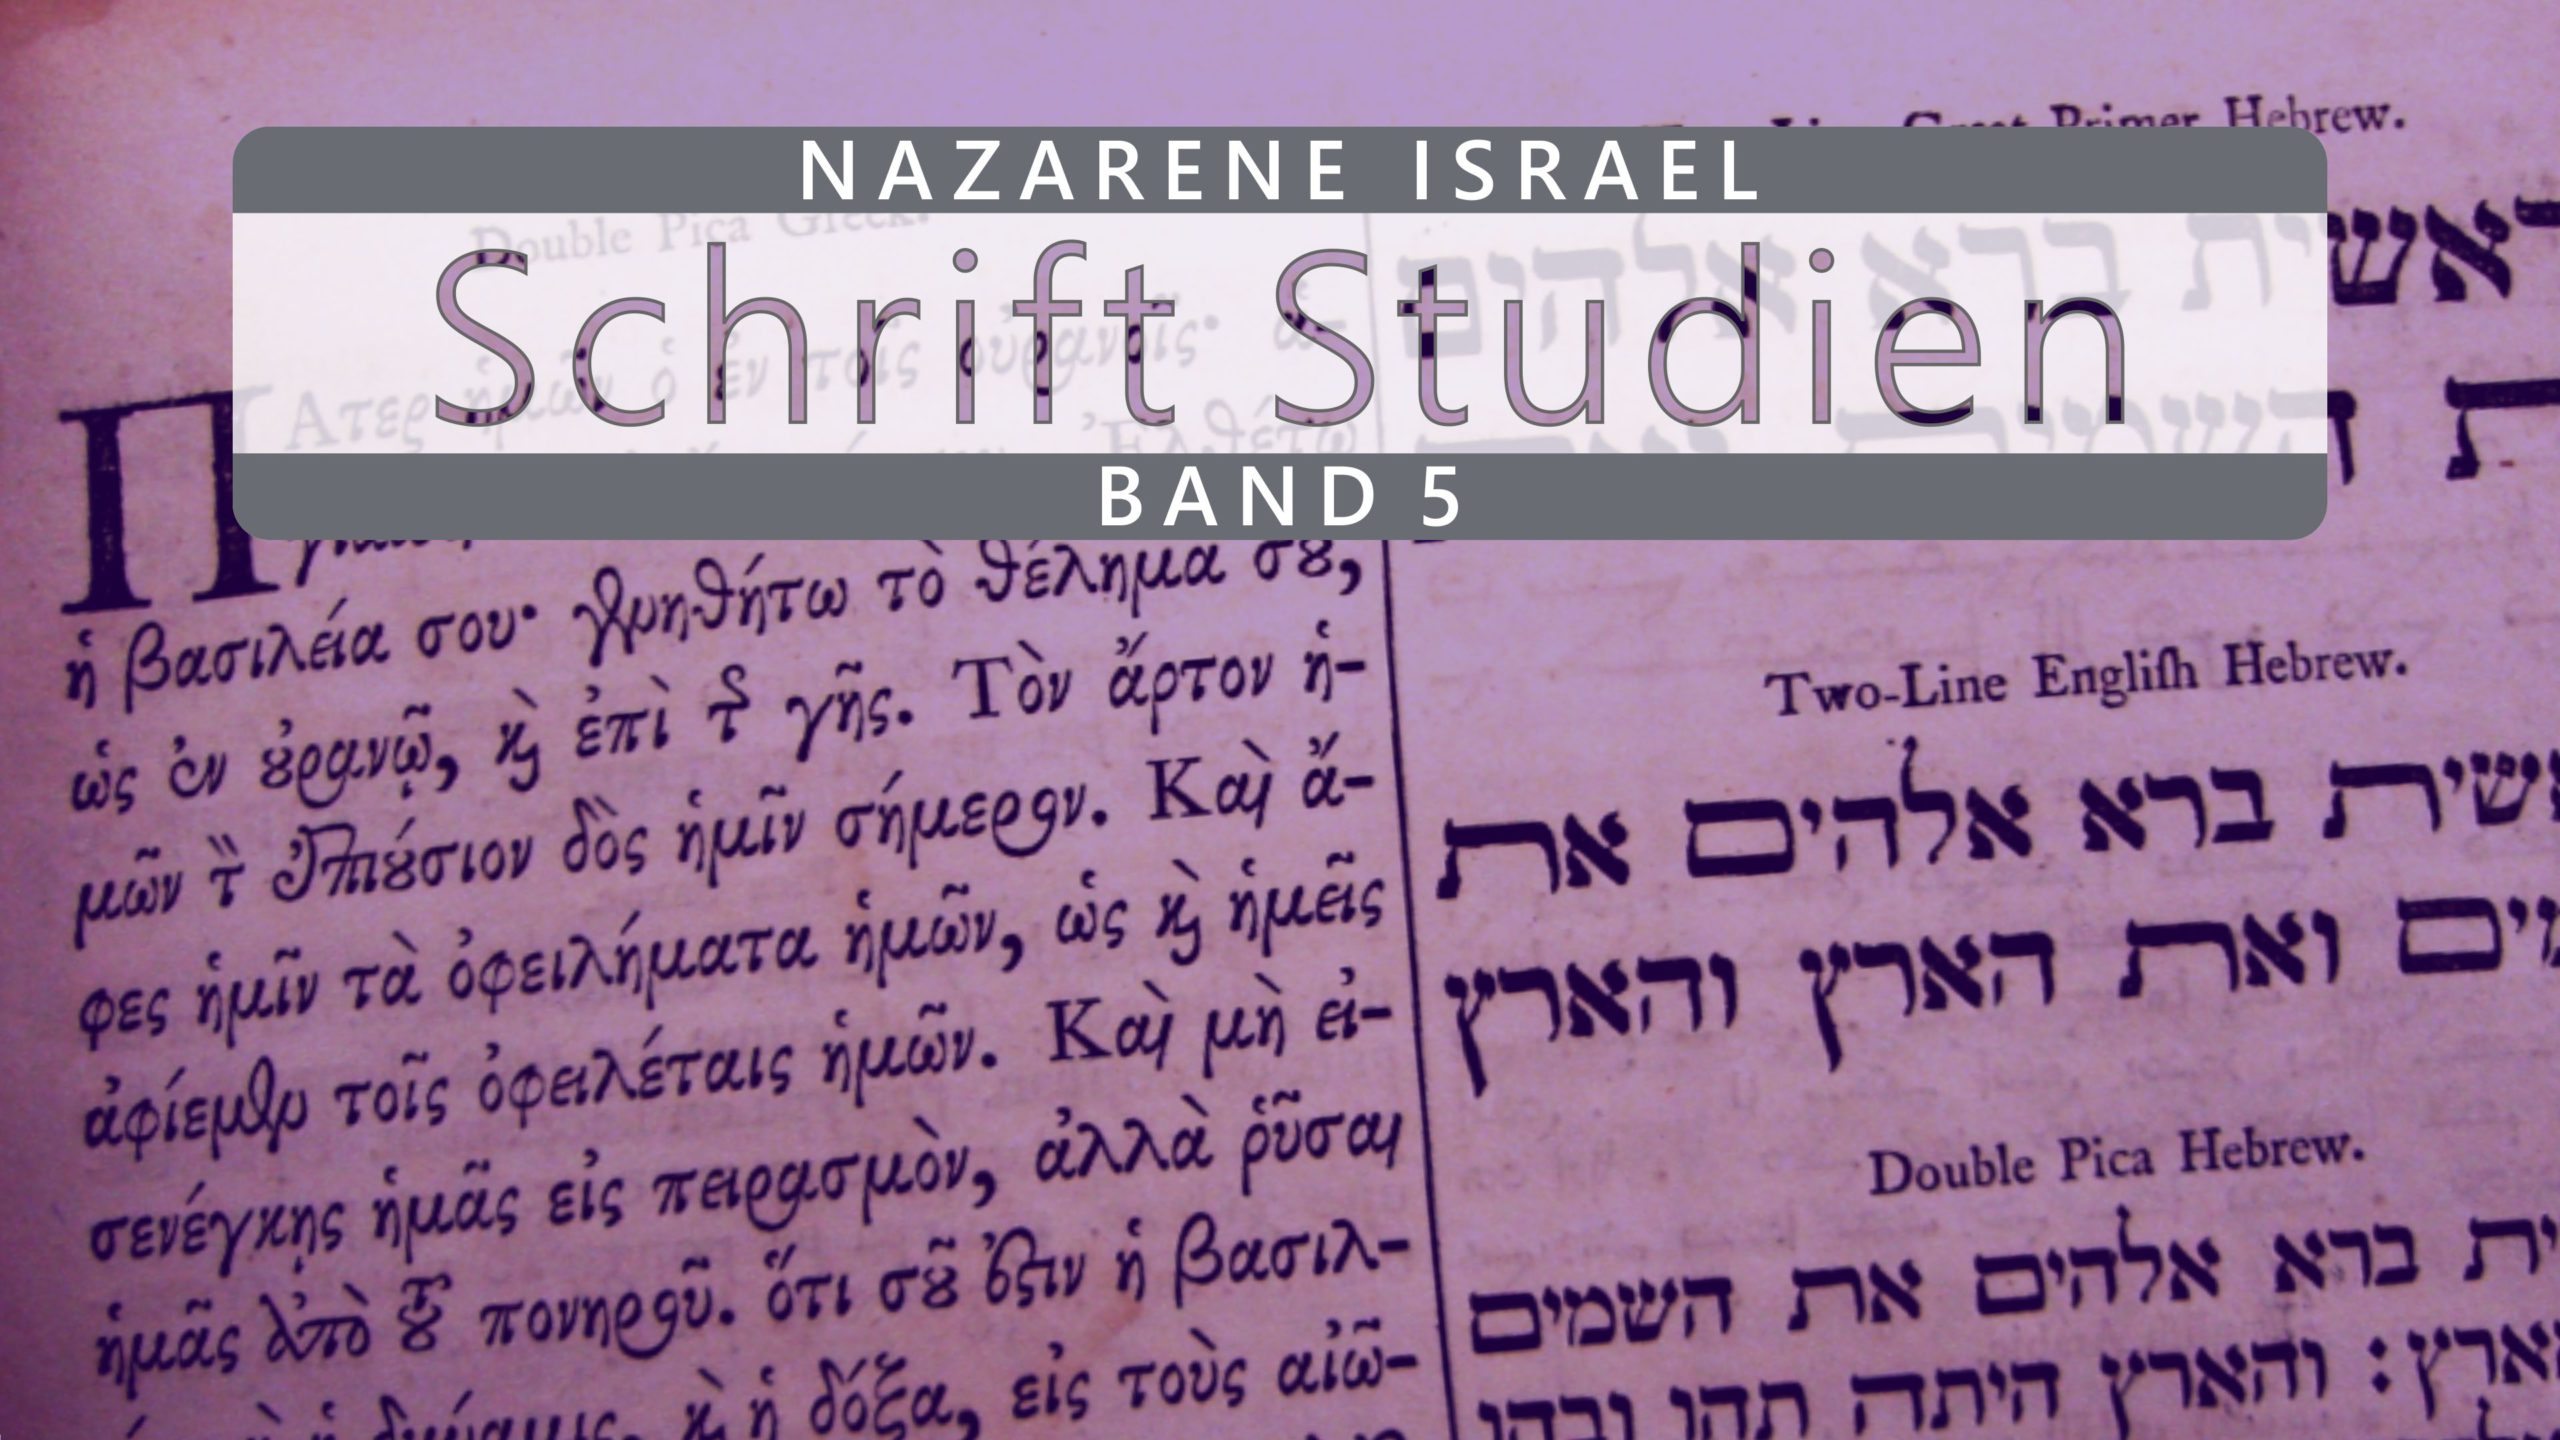 Nazarene Schrift Studien Band 5